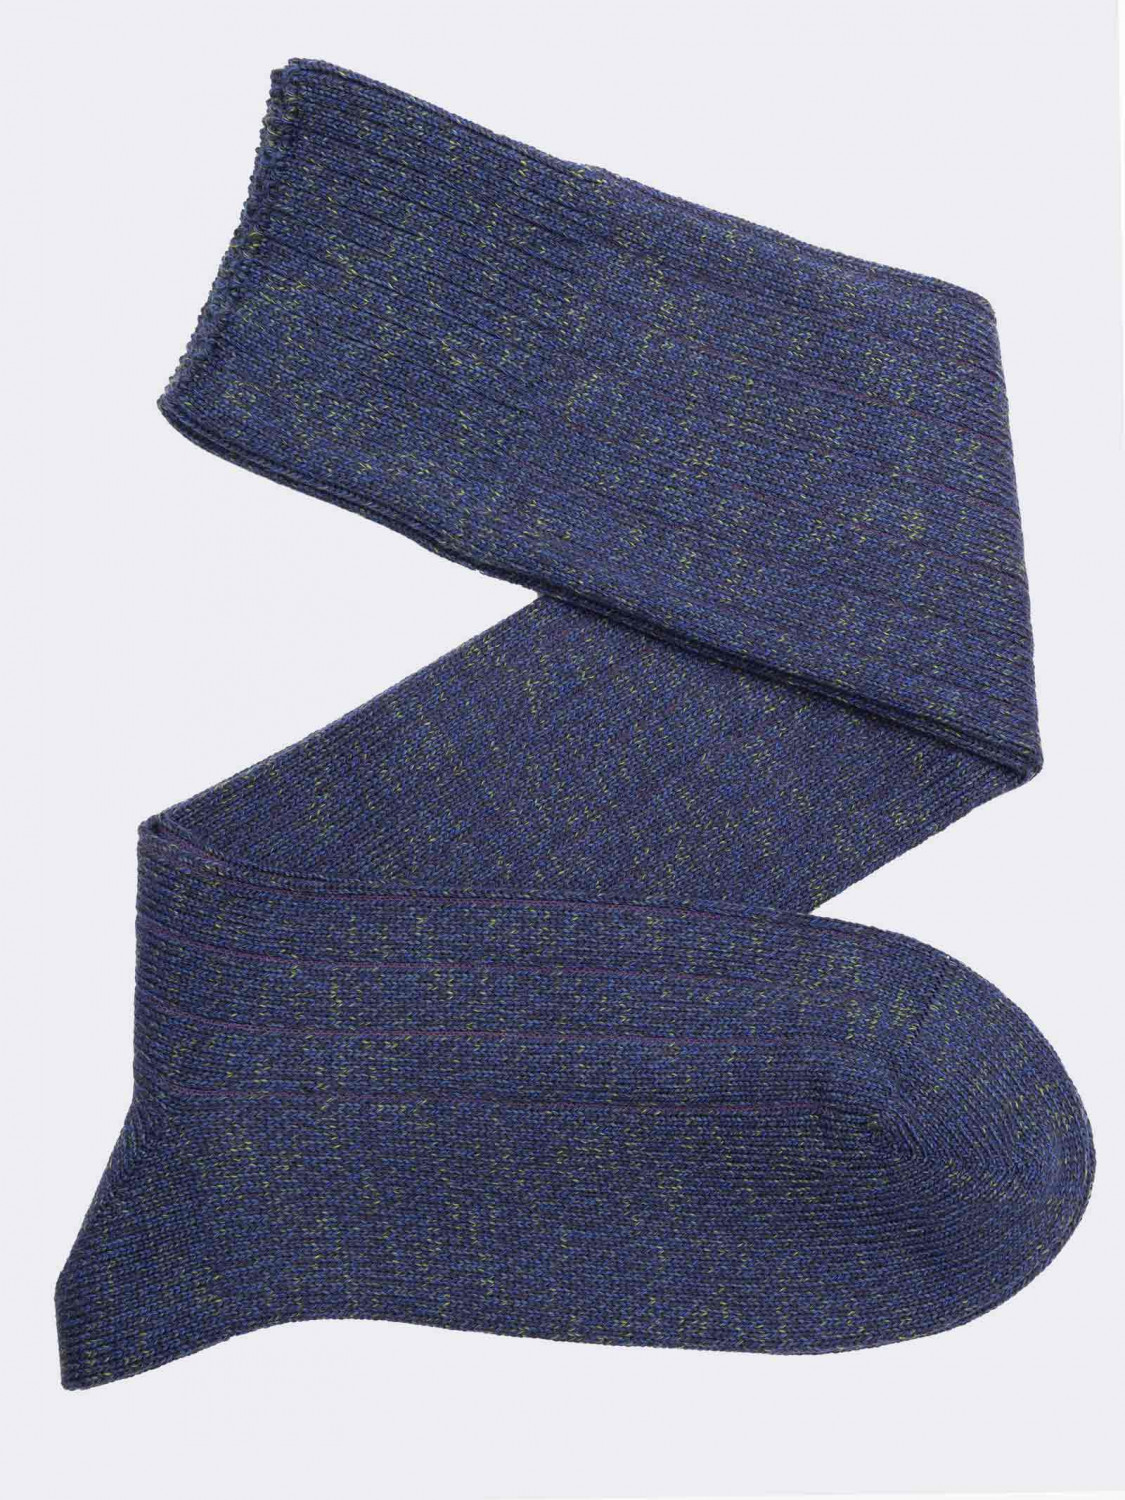 Men's ribbed melange yarn knee high socks in warm cotton